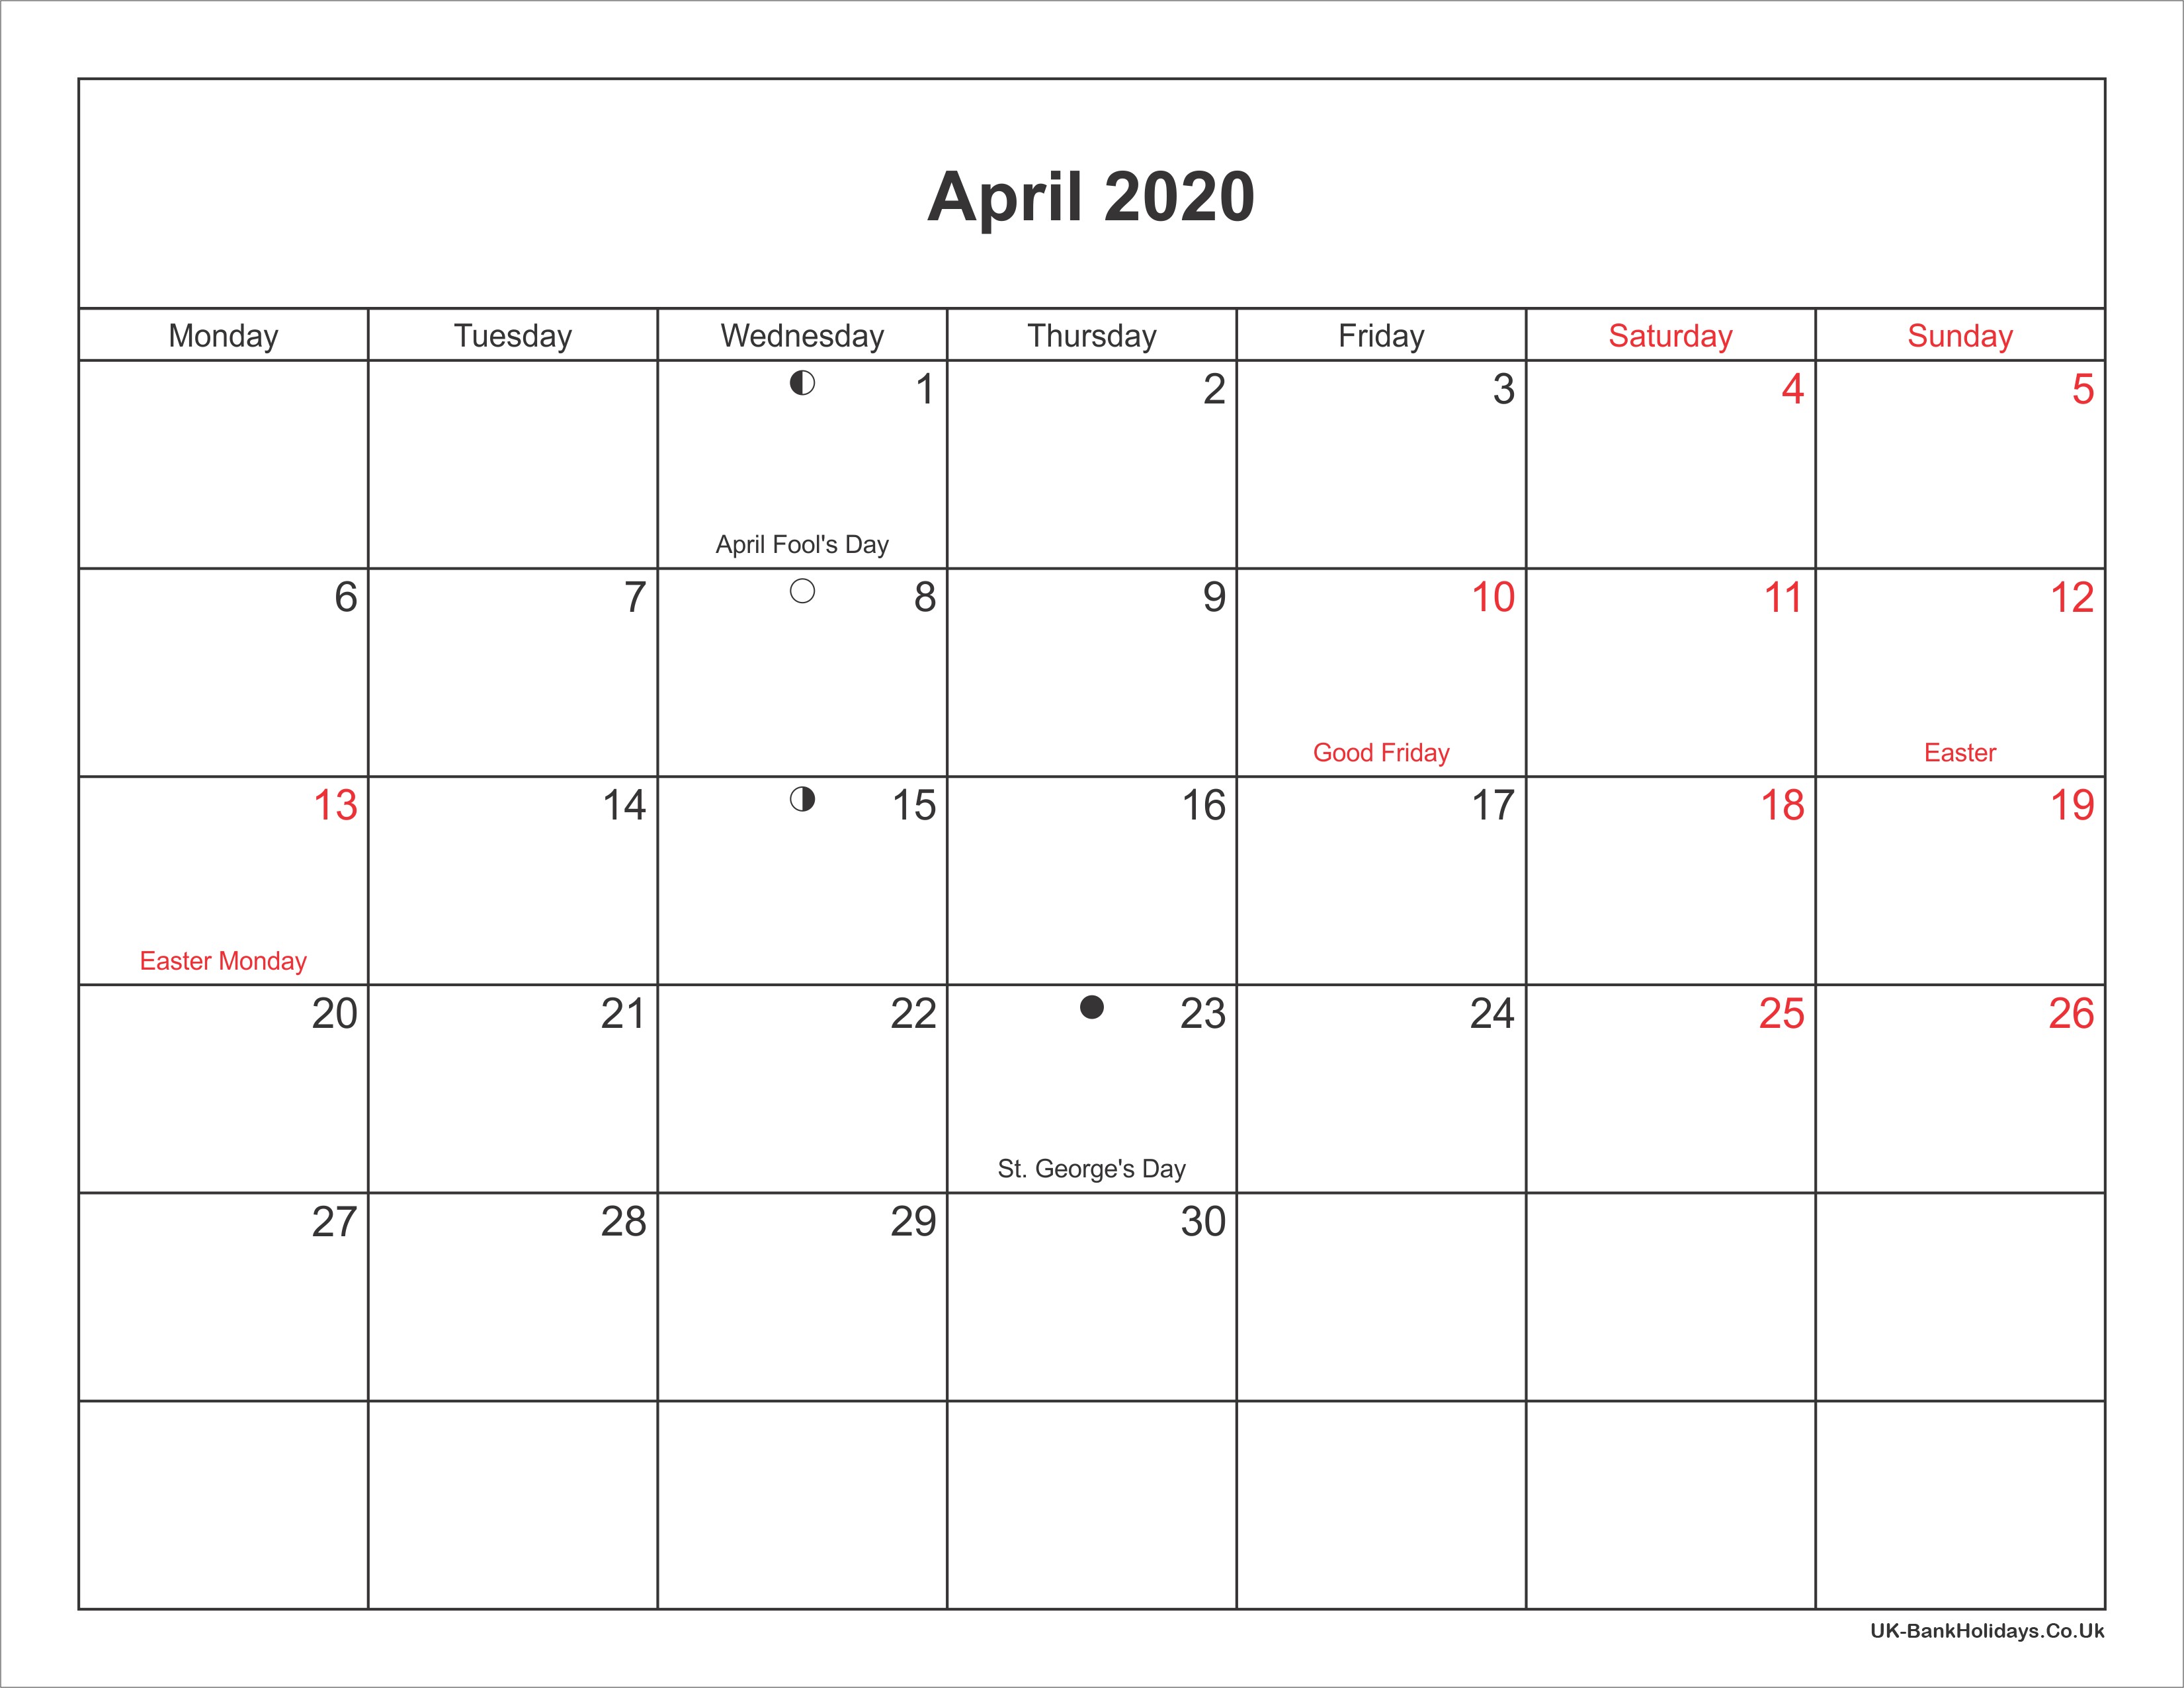 April 2020 Calendar Printable with Bank Holidays UK